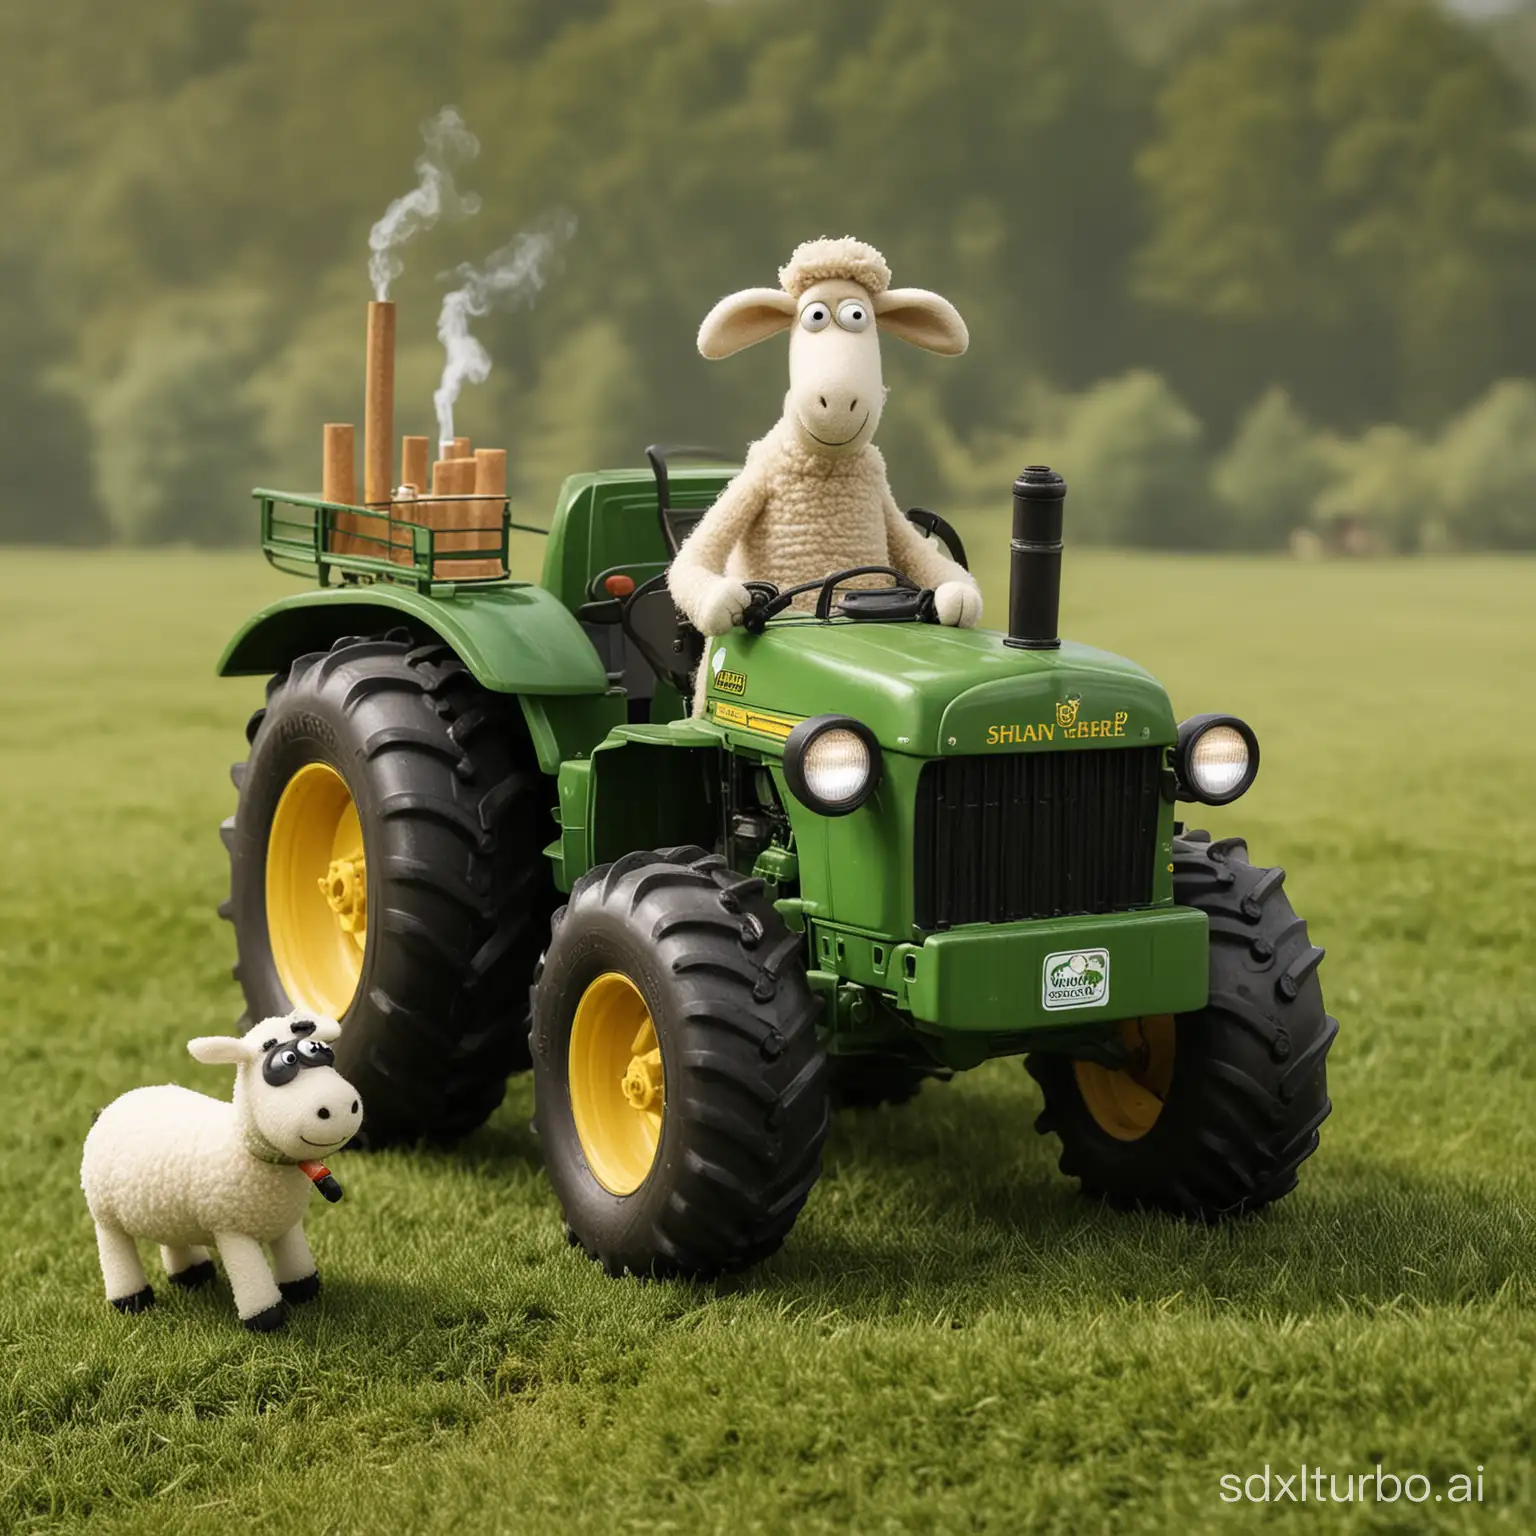 Shaun-the-Sheep-Riding-a-John-Deere-with-a-Cigarette